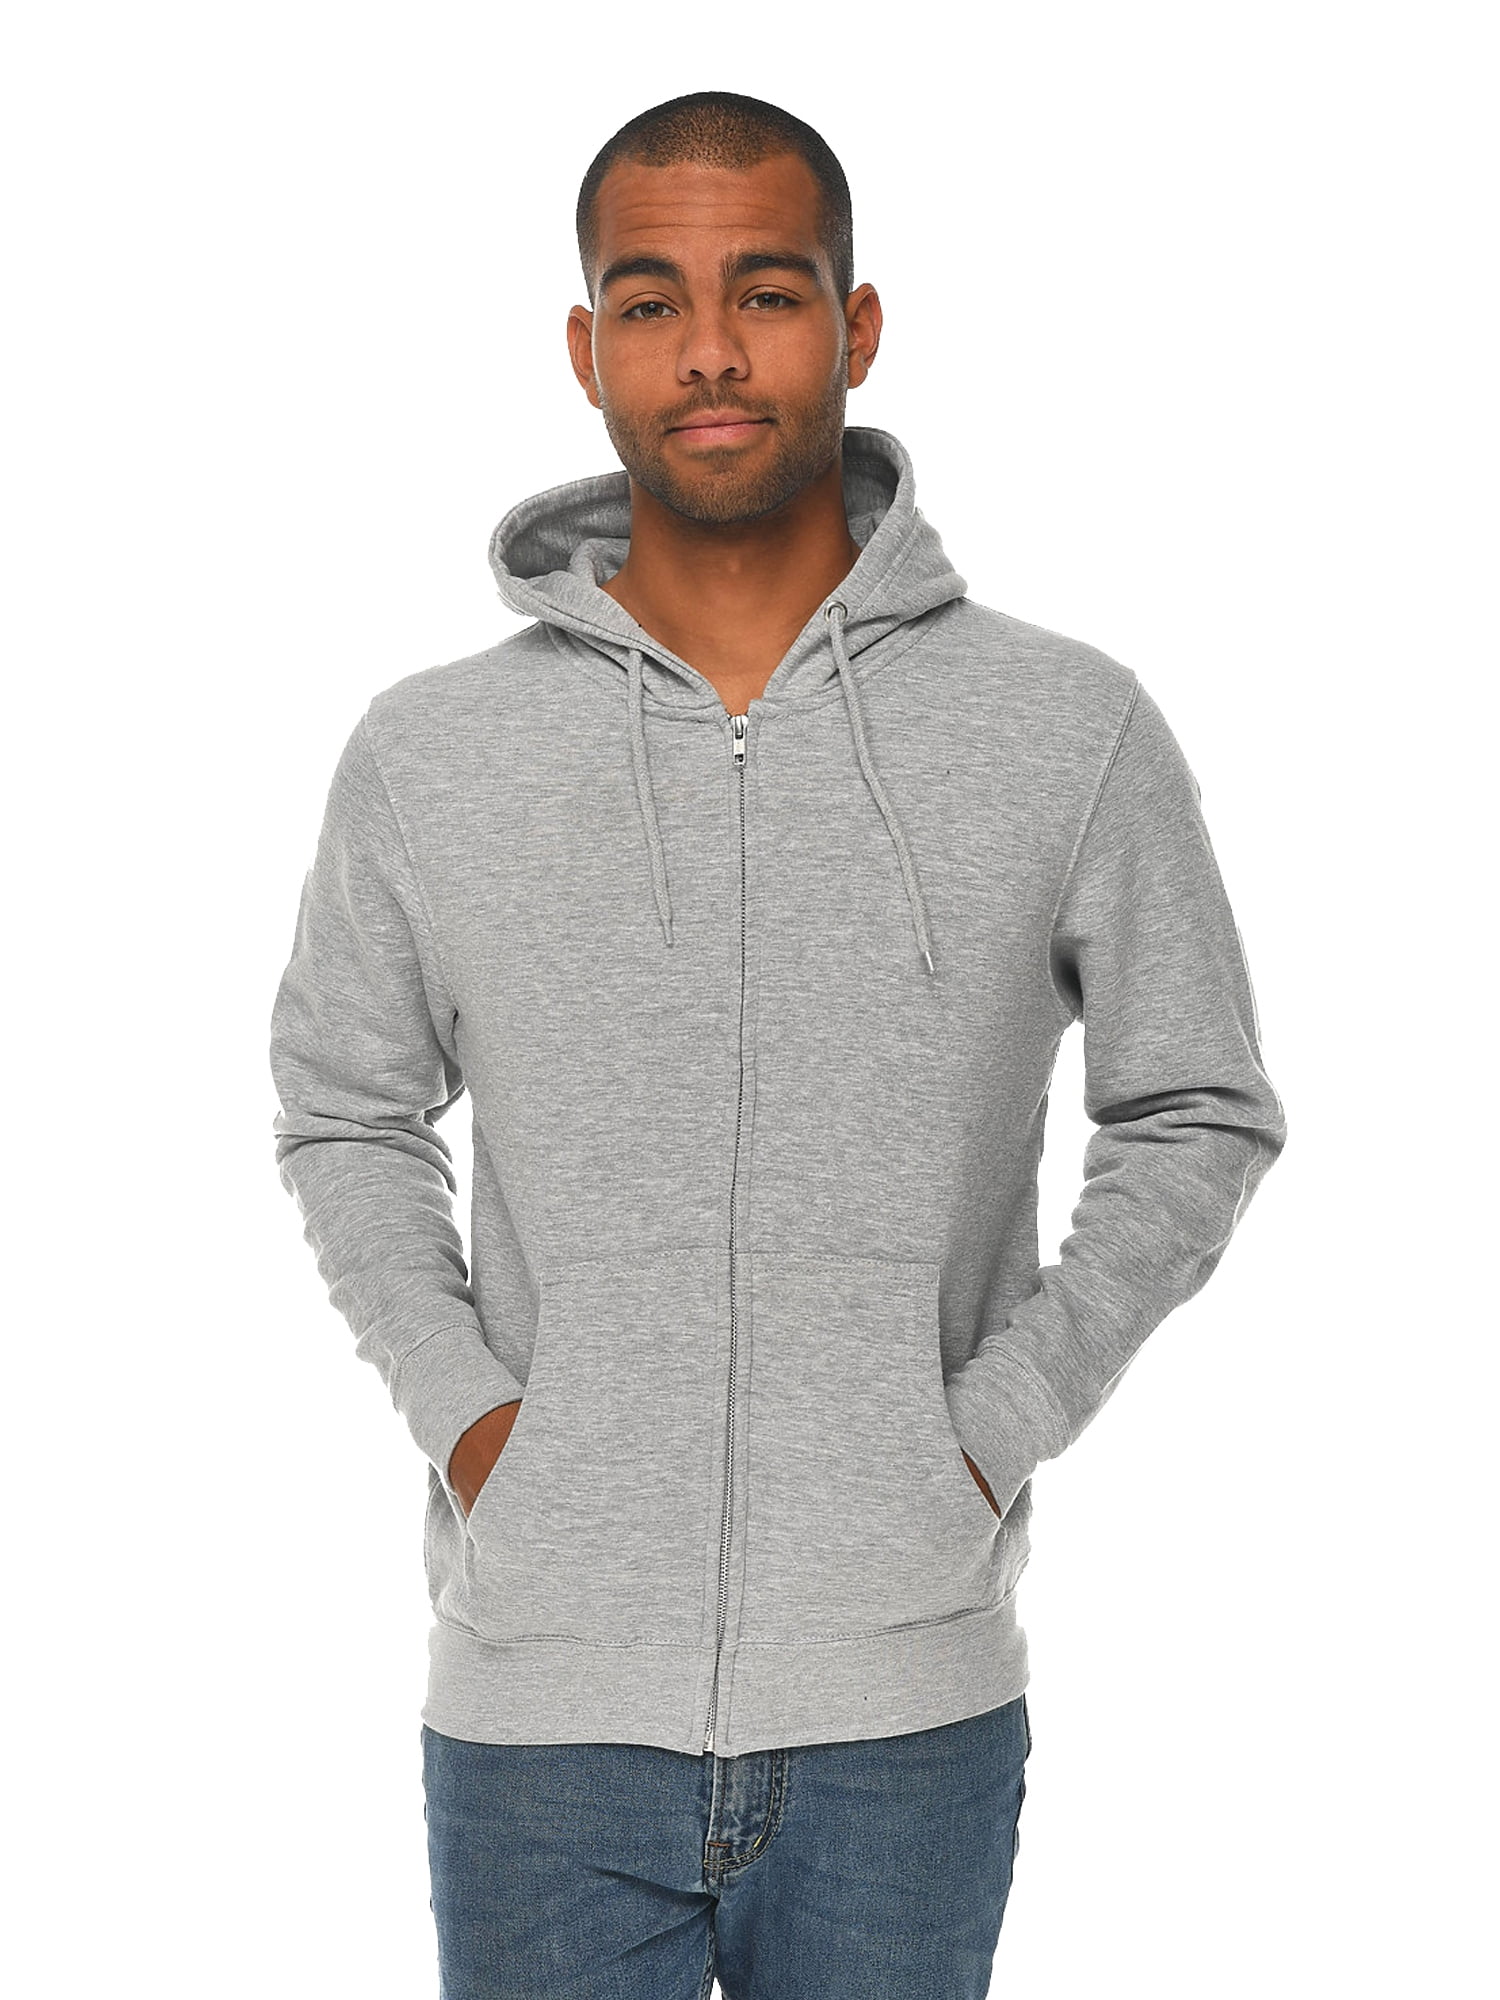 Ash gray hooded sweatshirt full zip  "hoody" Men's size Large NEW 